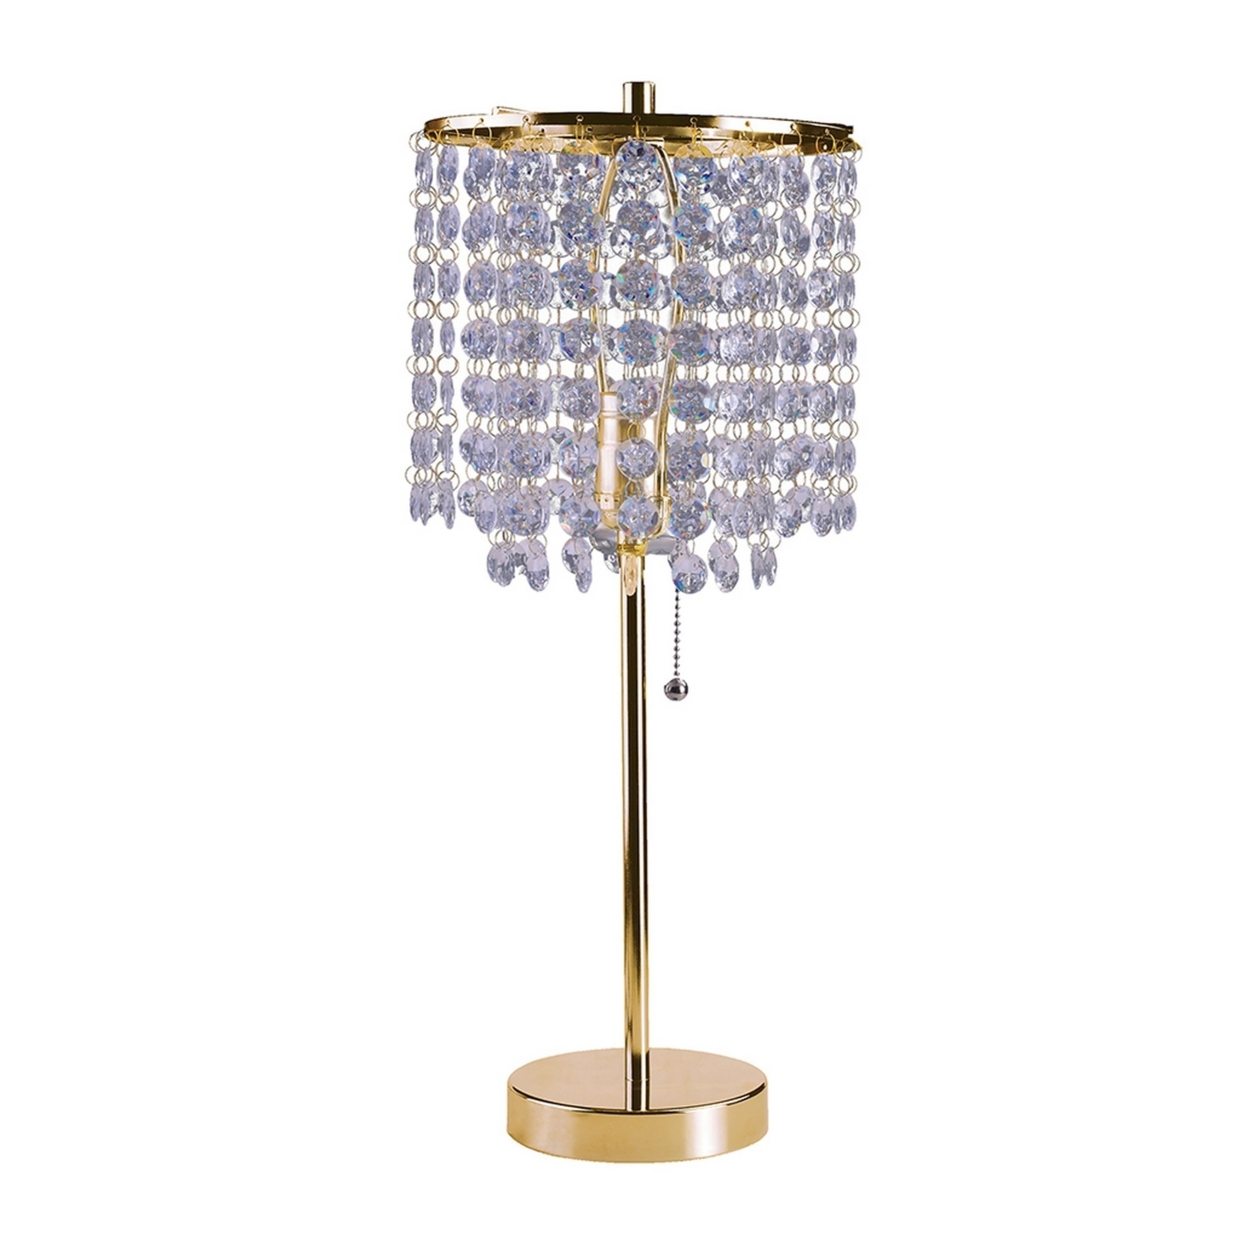 Metal Stalk Design Table Lamp With Hanging Crystals Shade, Gold- Saltoro Sherpi